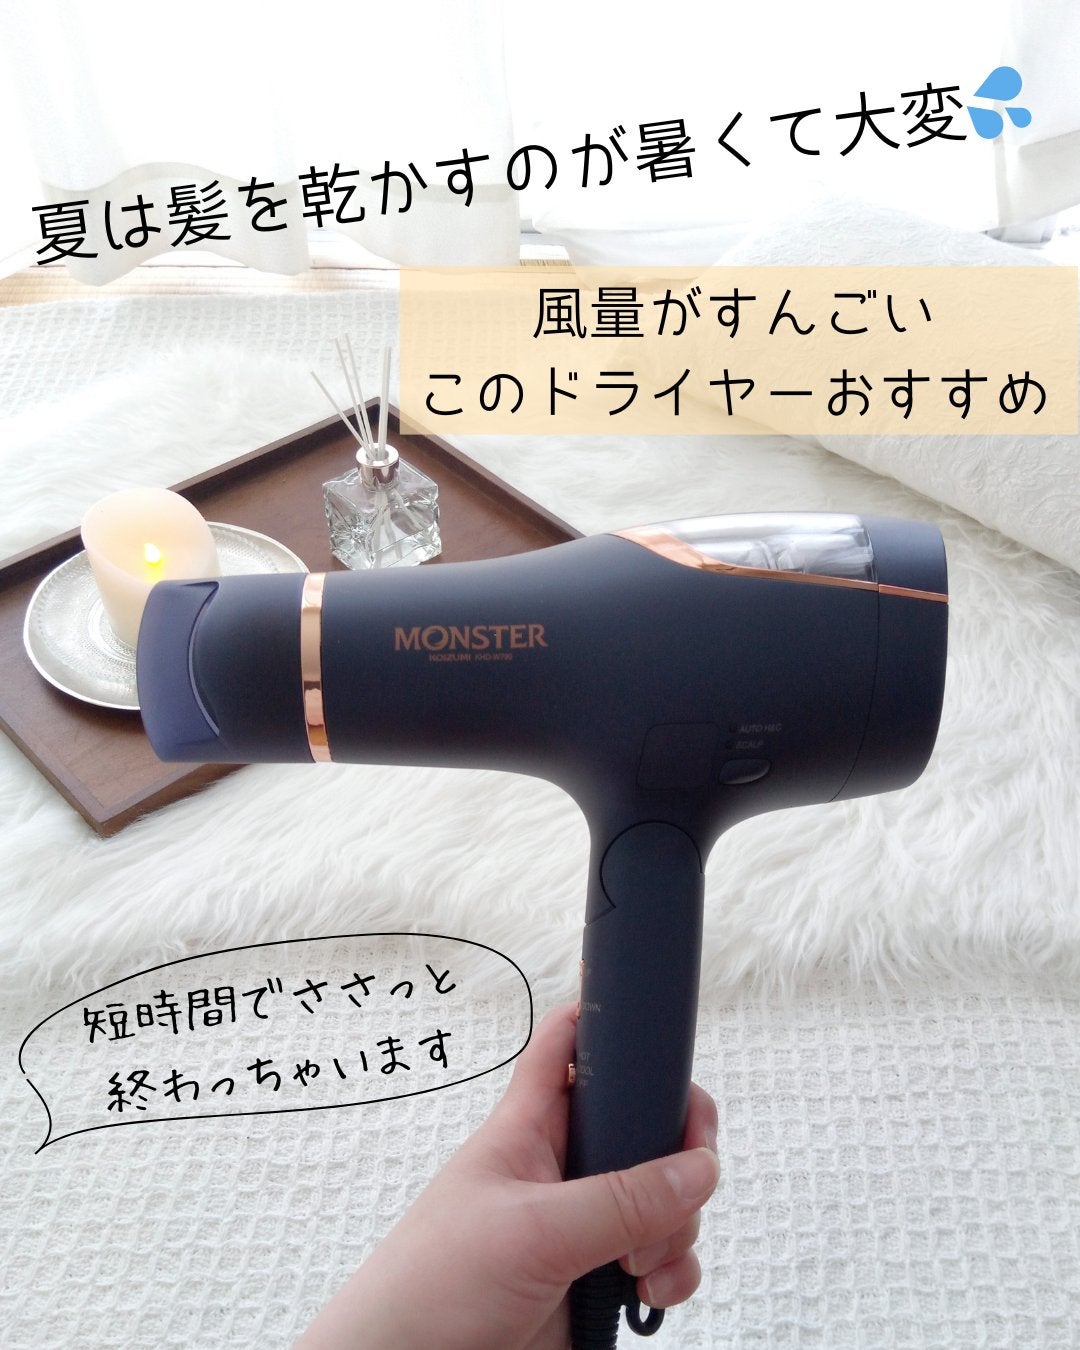 【MONSTER】ダブルの大風量が早く髪を乾かす！ KOIZUMI ドライヤー